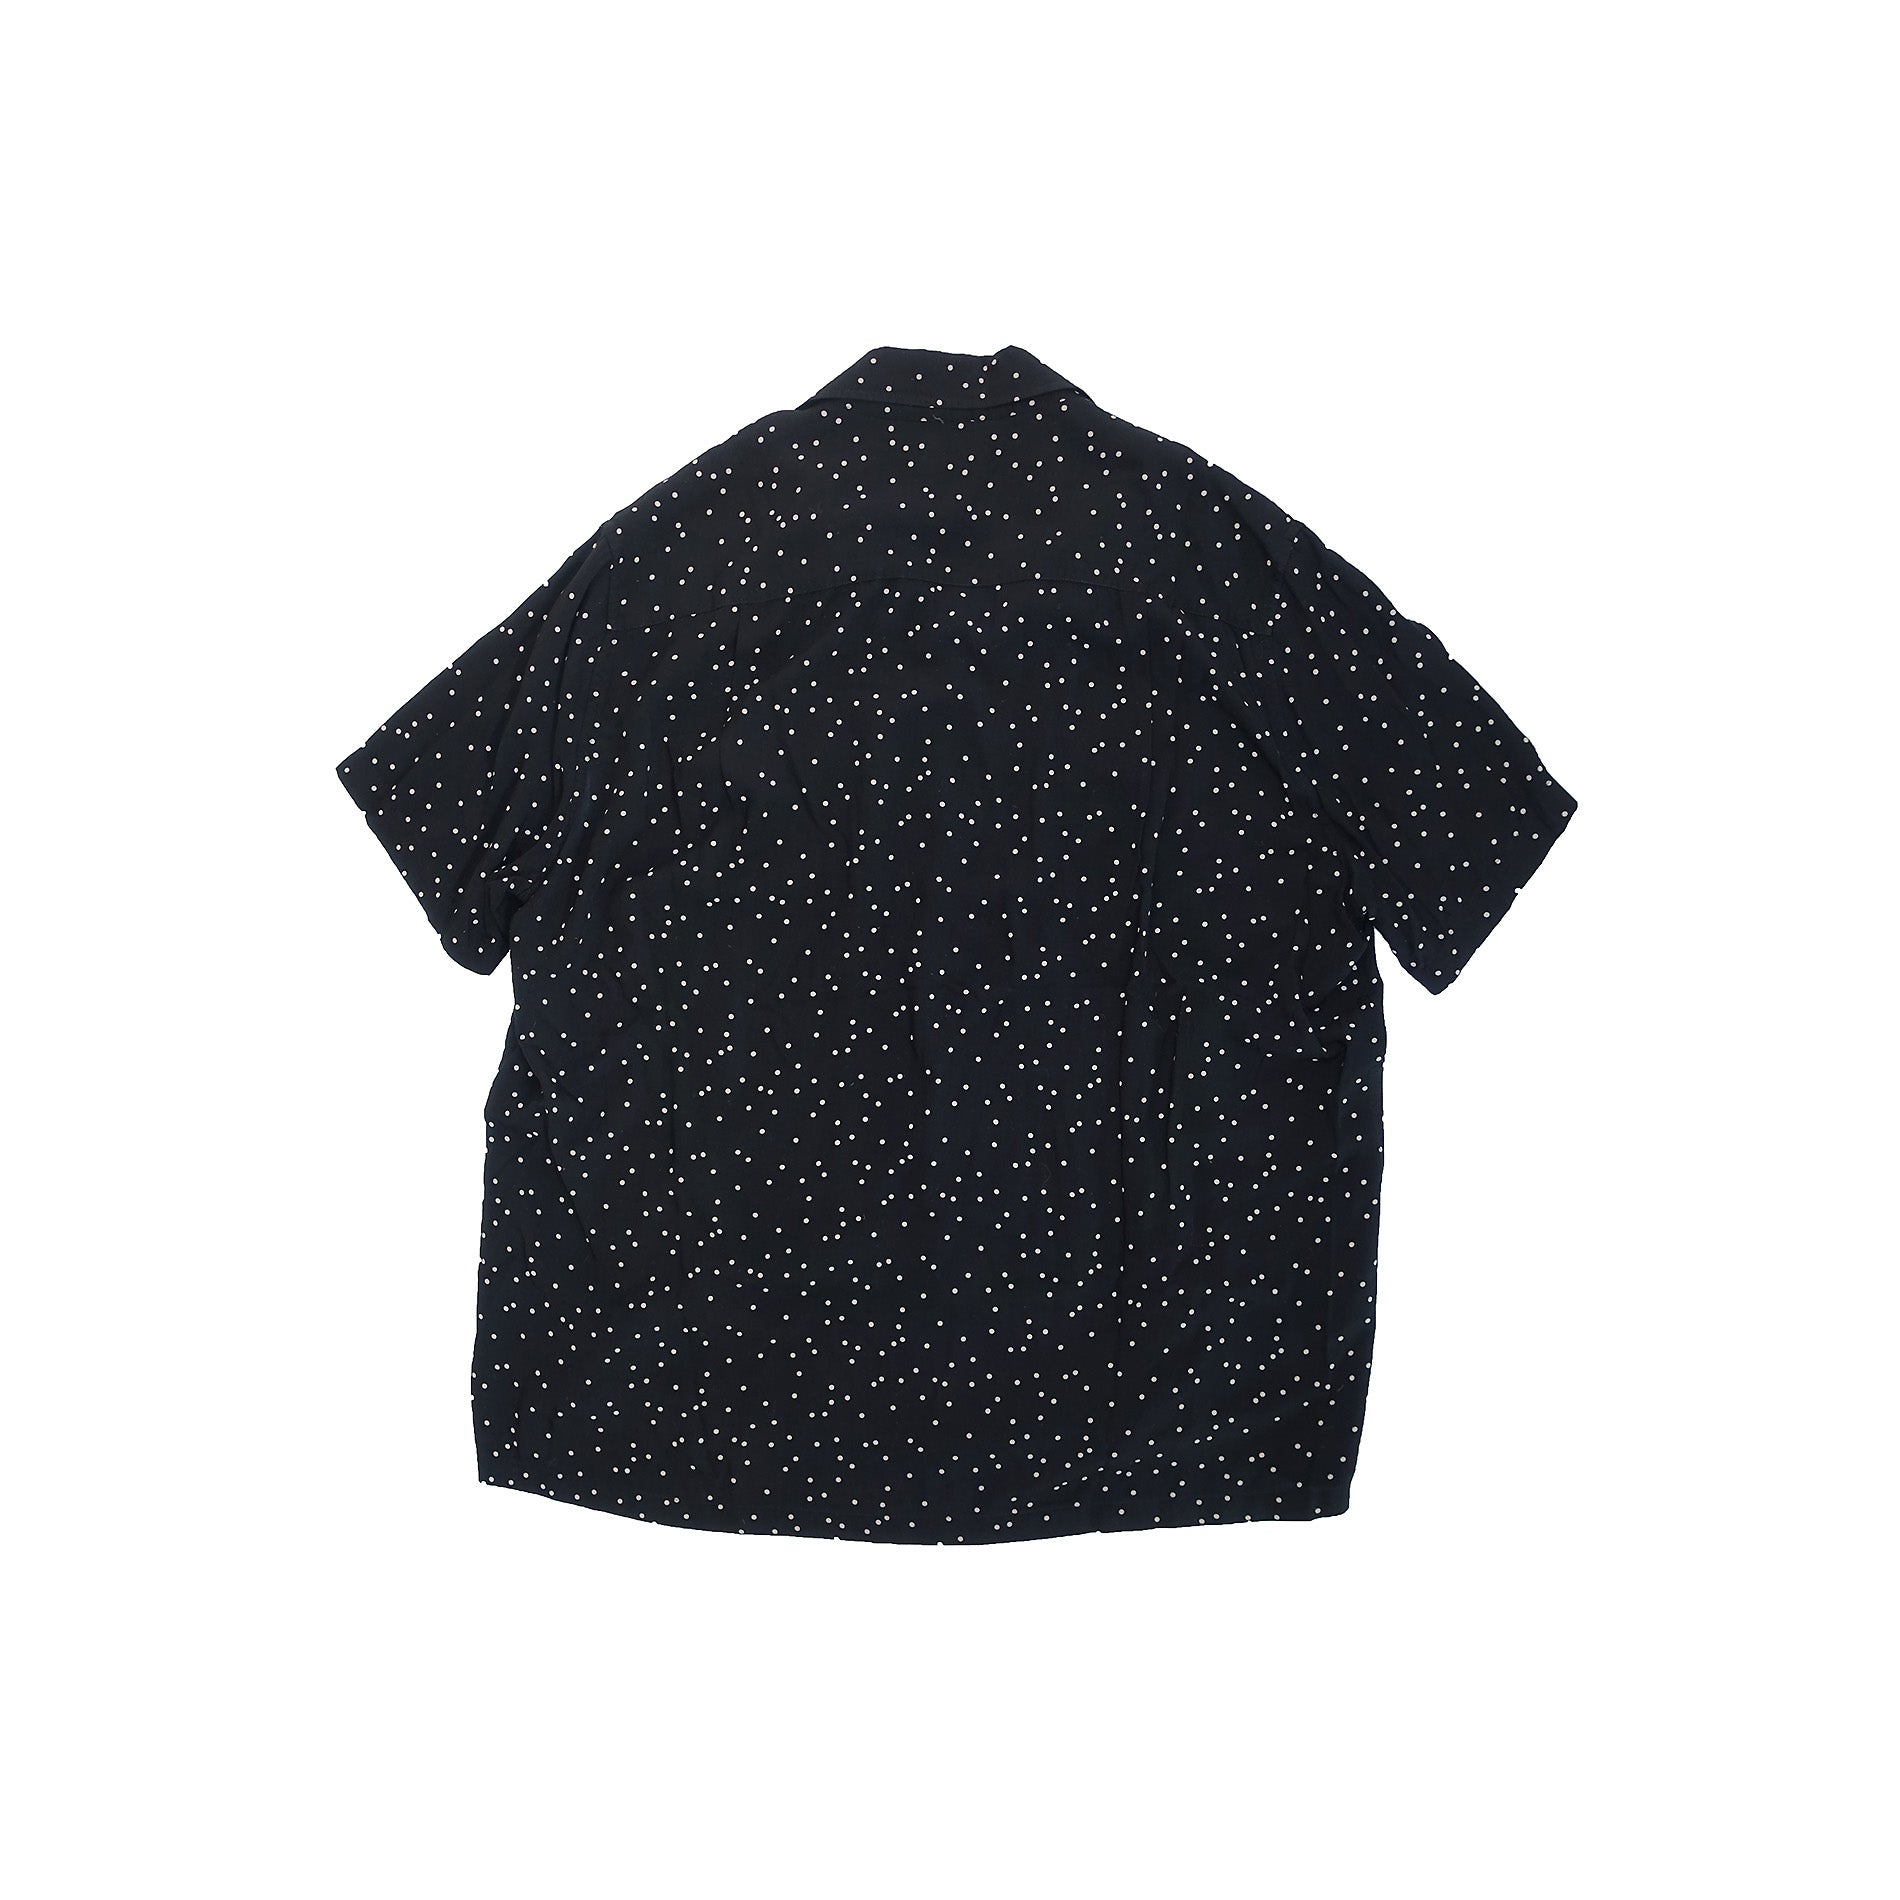 Saint Laurent Paris FW15 Micro Dot Viscose Shirt